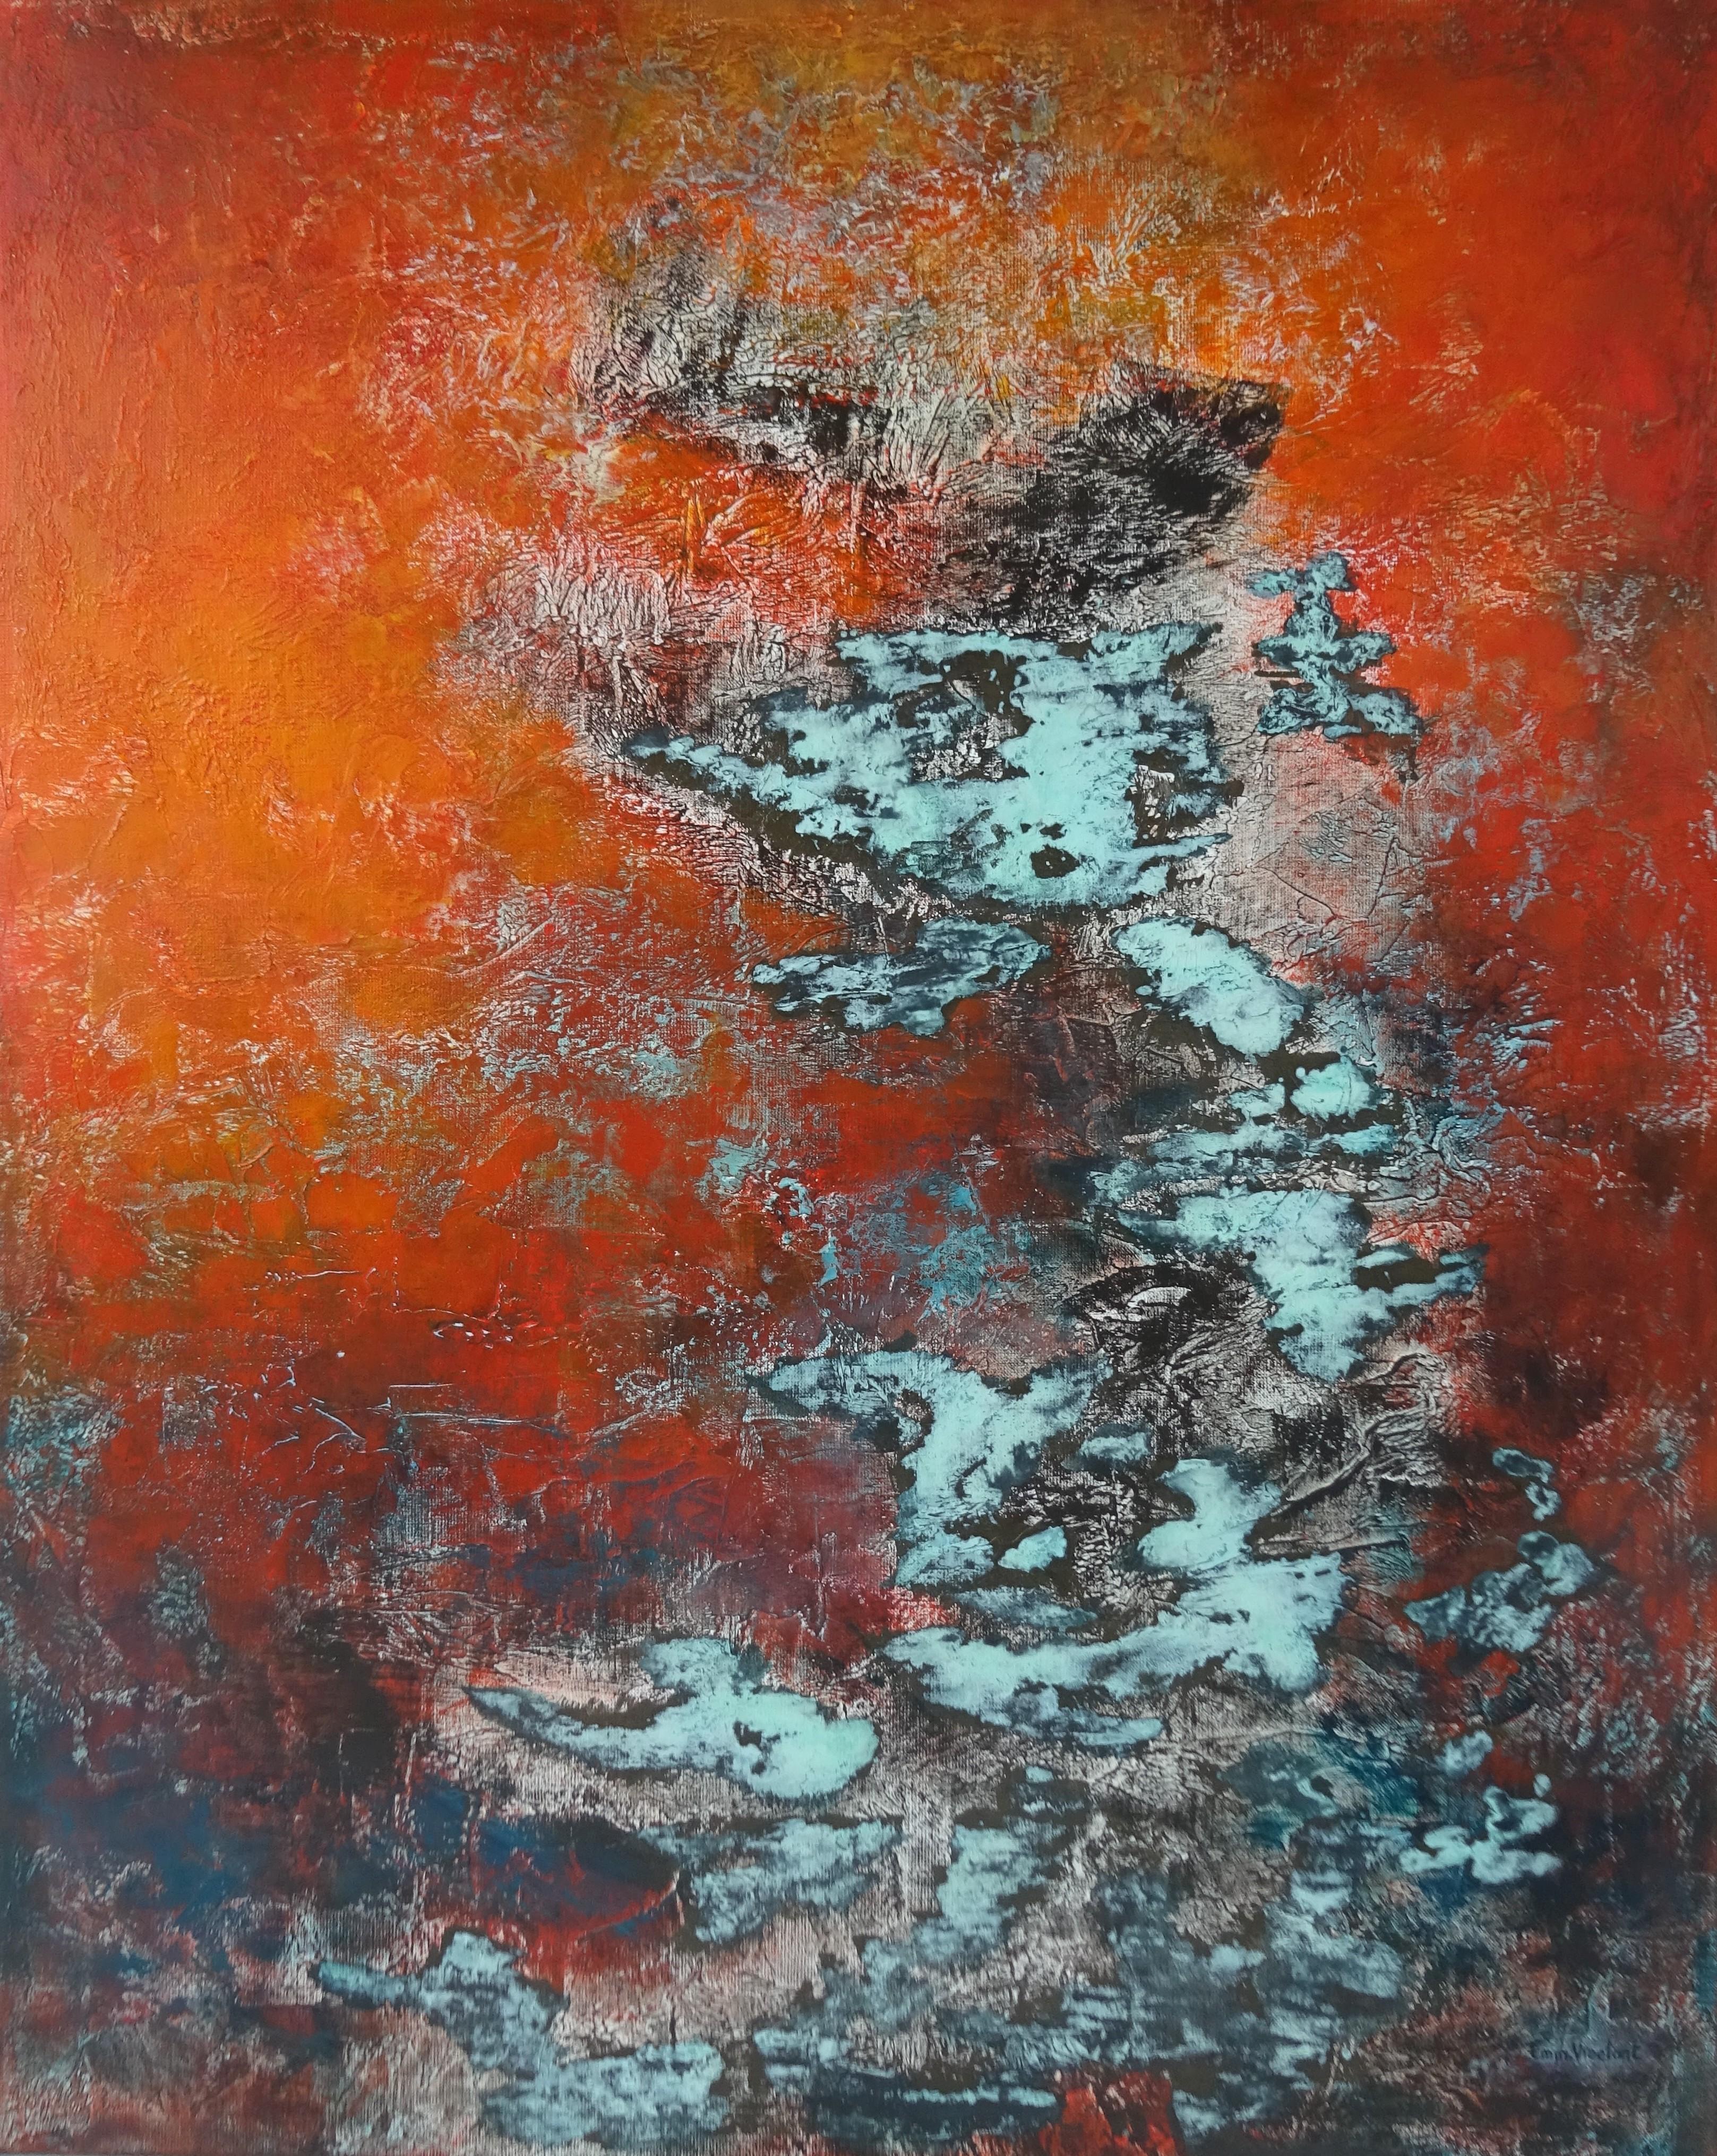 Emmanuelle Vroelant Interior Painting - "Chinese mythology" abstract acrylic oxidation on linen canvas 100x80cm 2020